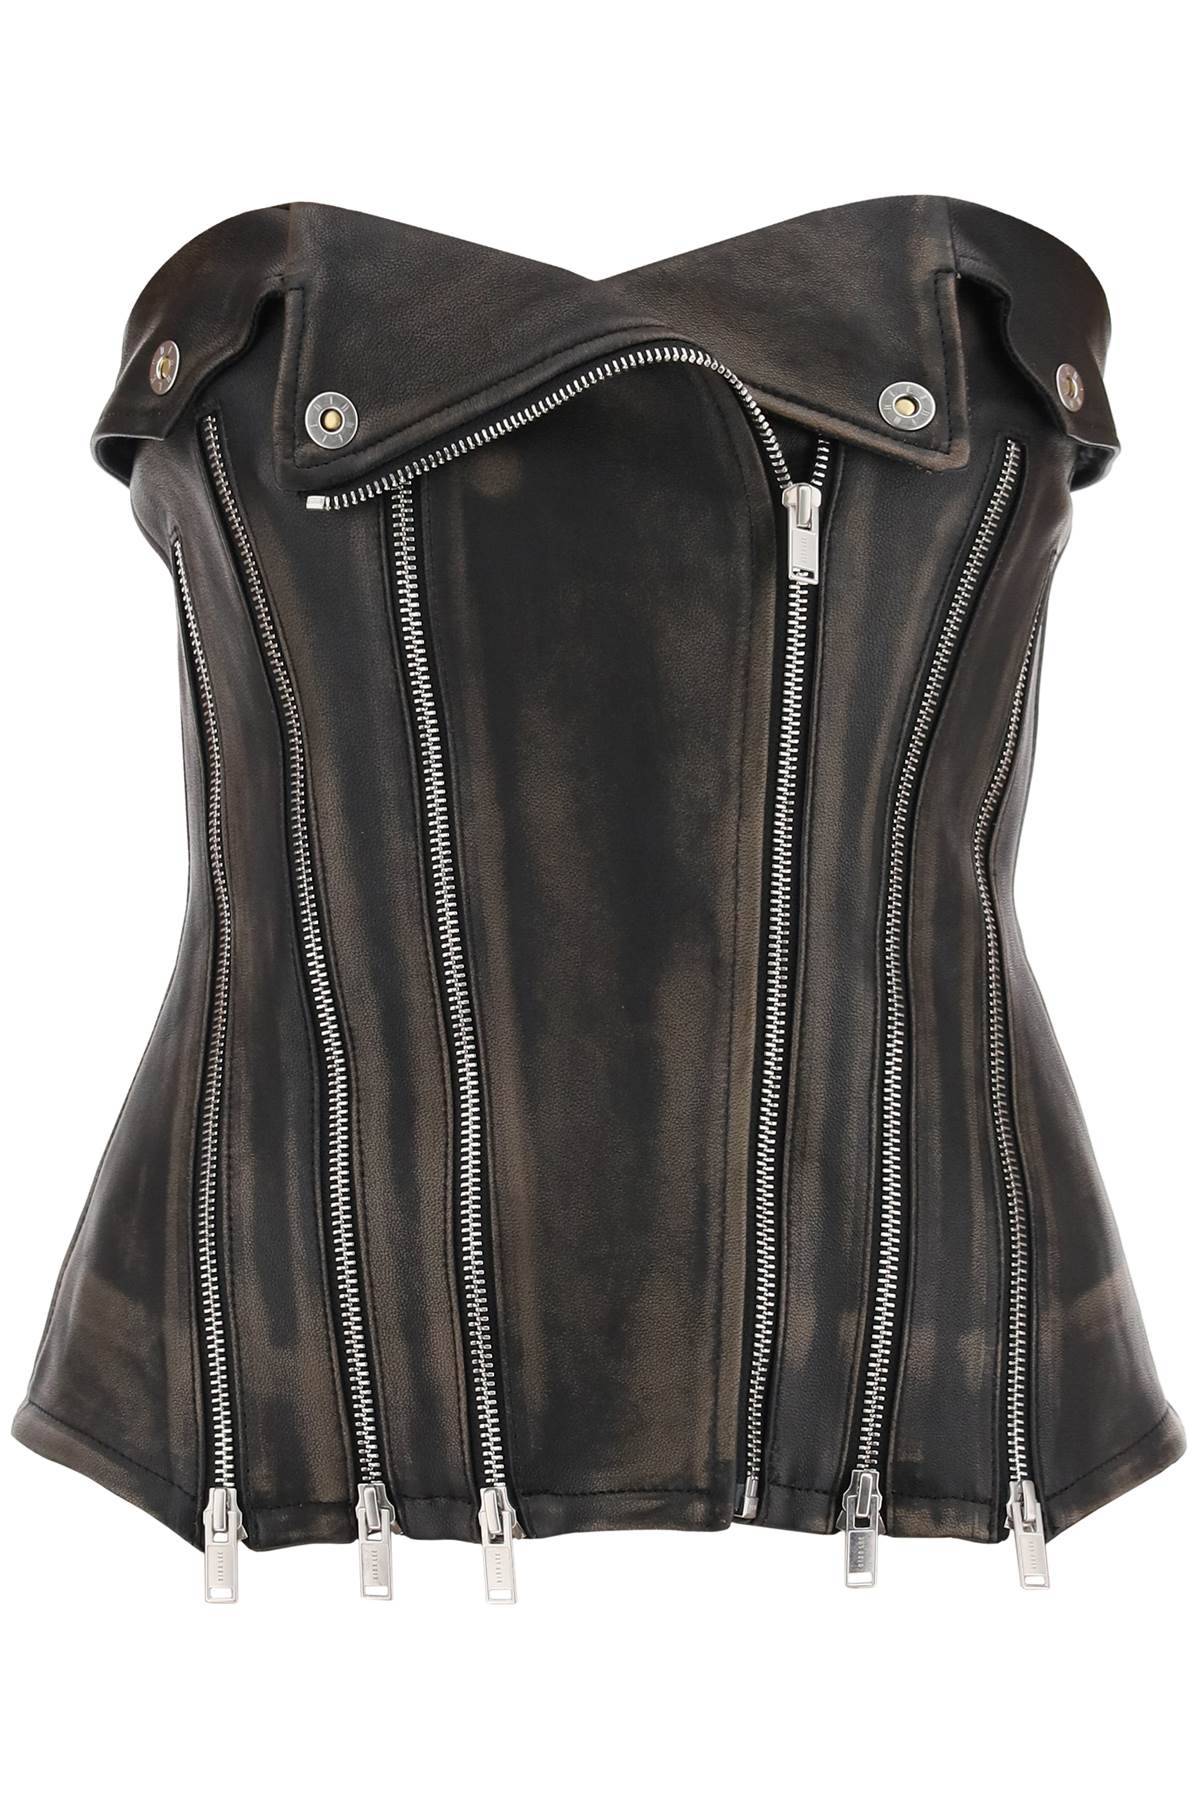 Dion Lee DION LEE leather biker corset top